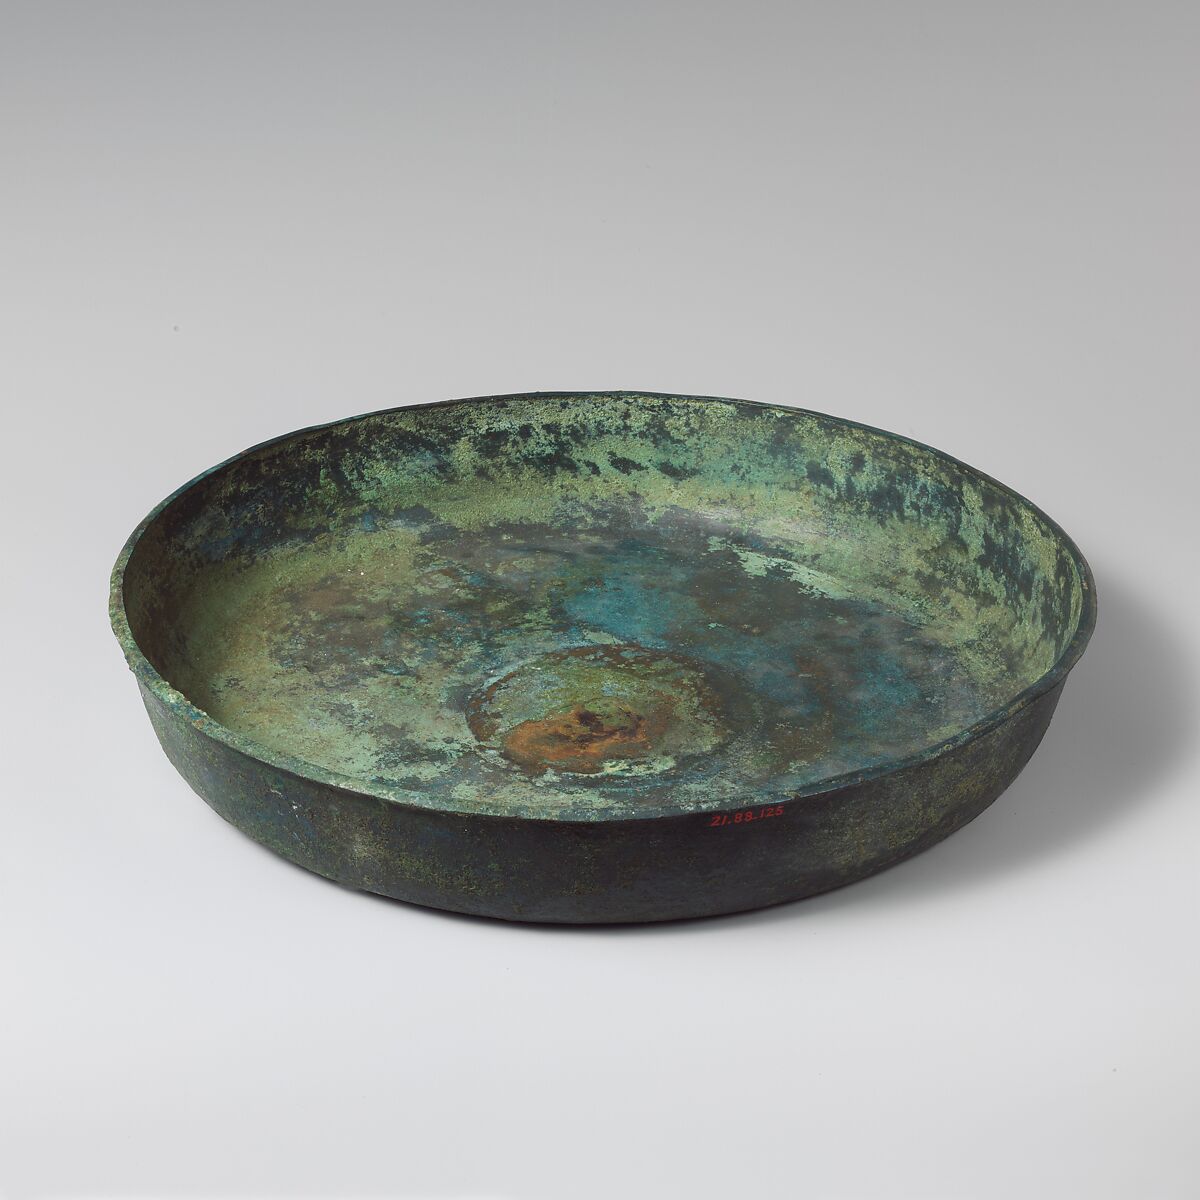 Bronze bowl and oinochoe (jug), Bronze, Etruscan 